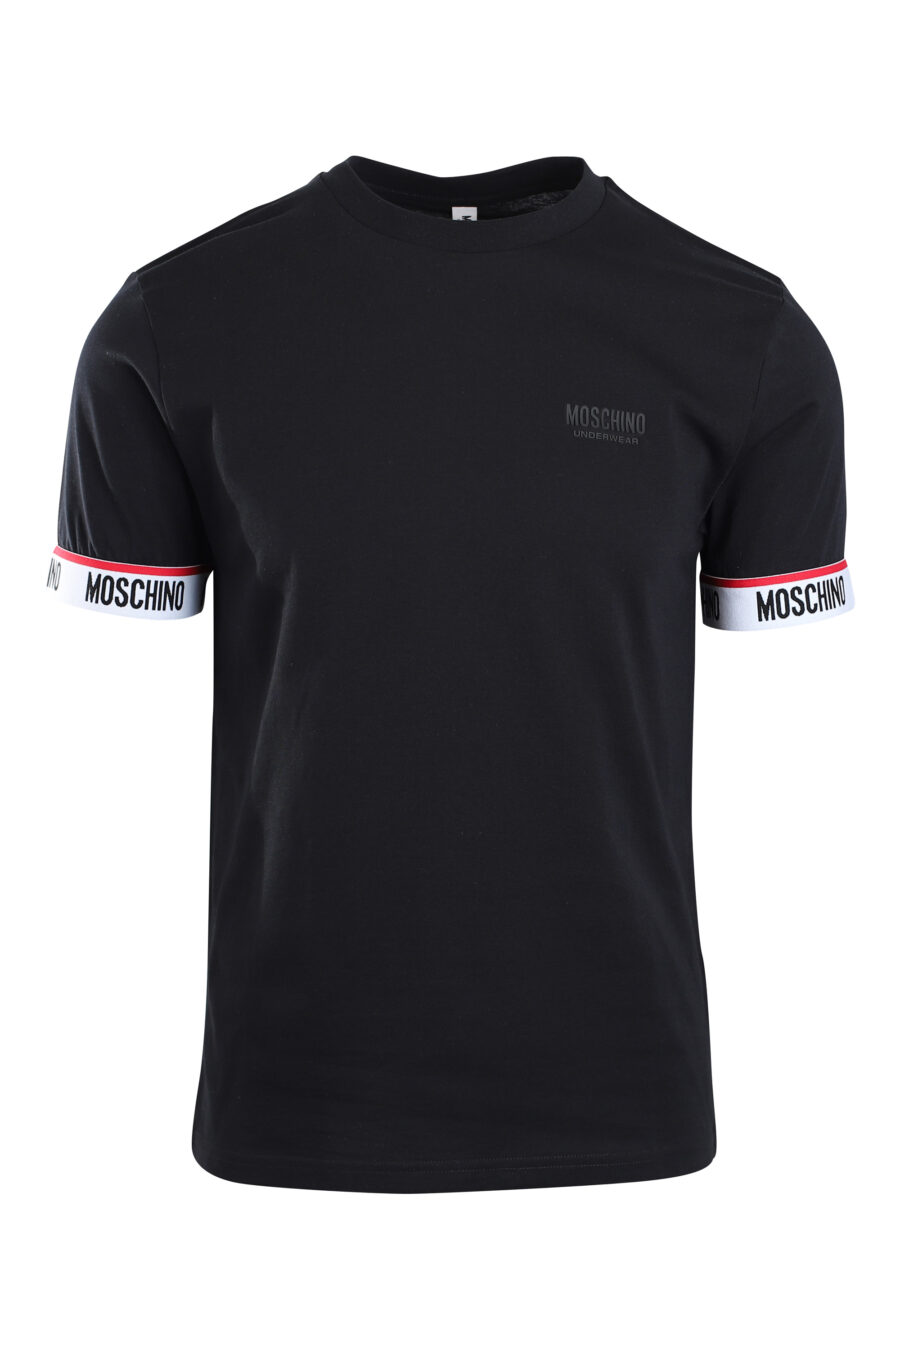 Camiseta negra con logo en banda en mangas y minilogo monocromático - IMG 2159